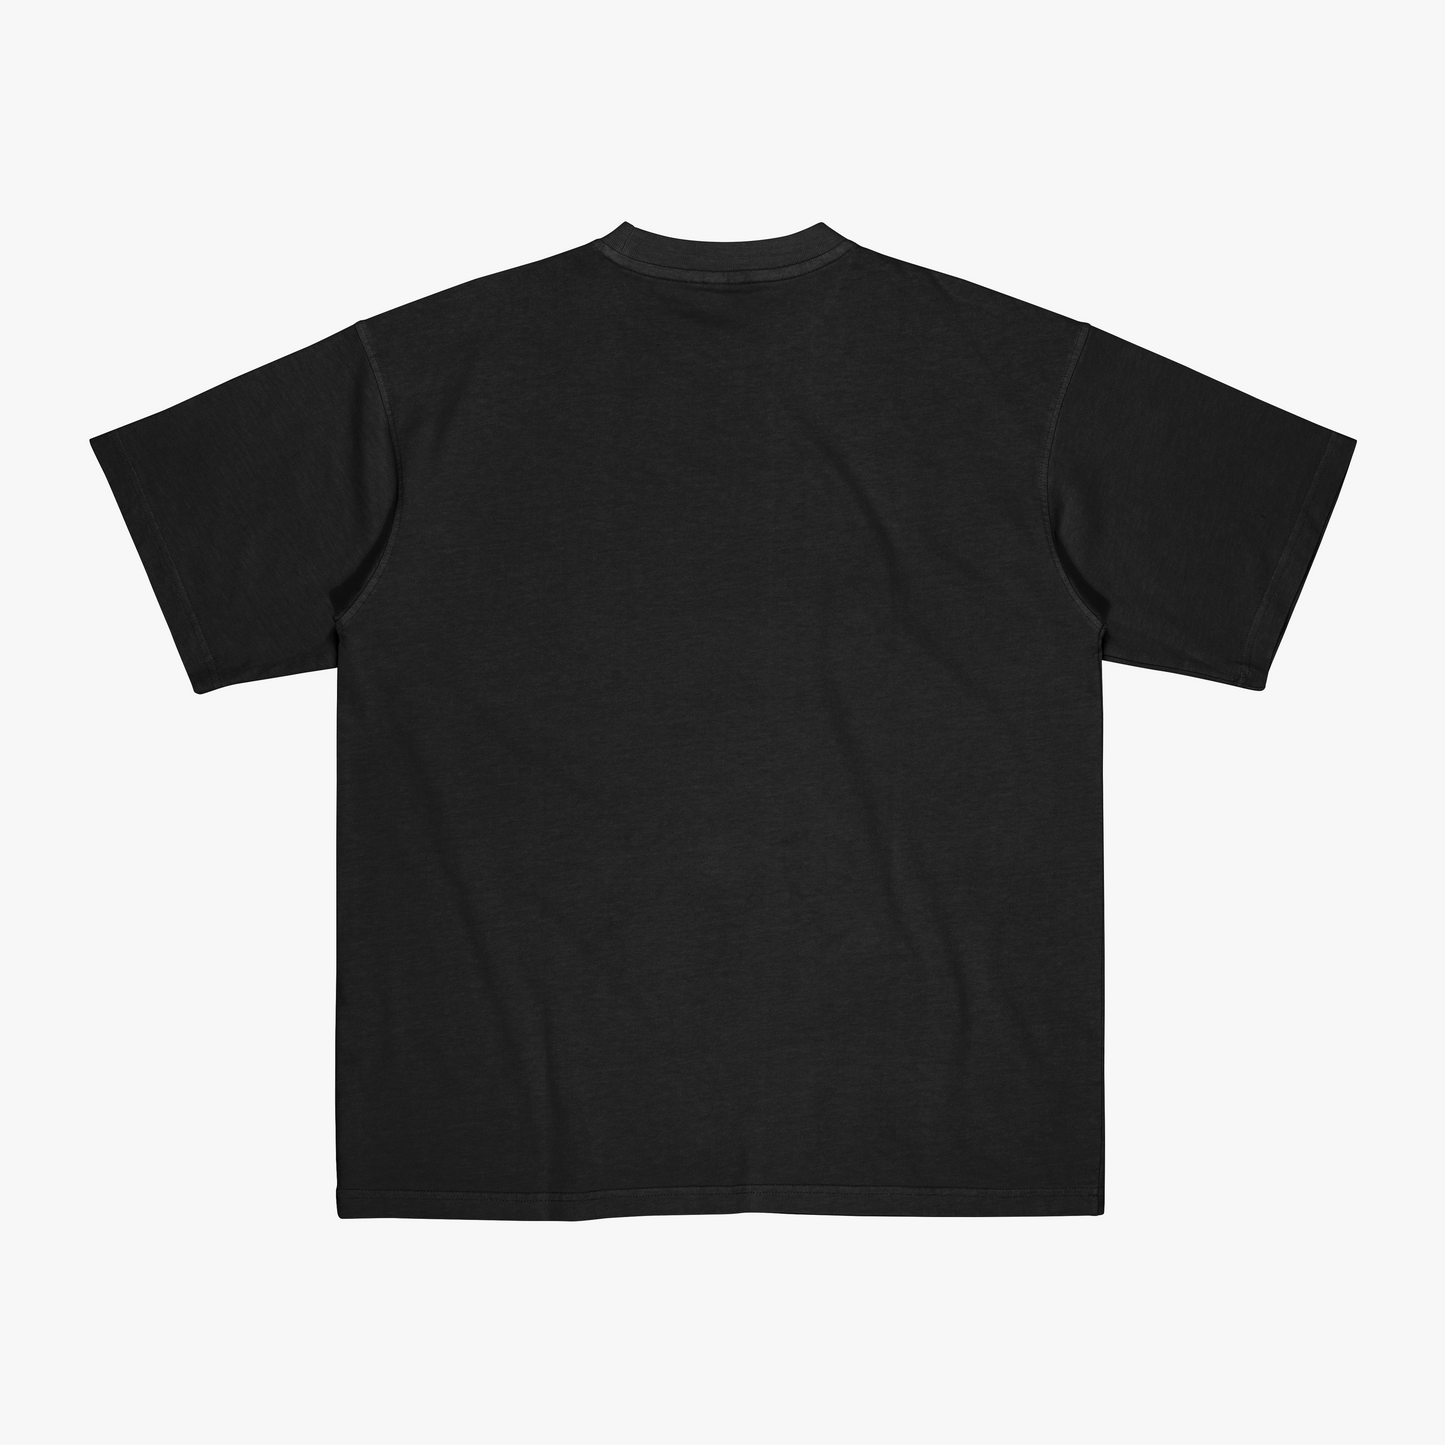 FakeButReal People Pleaser Black Oversize T-Shirt